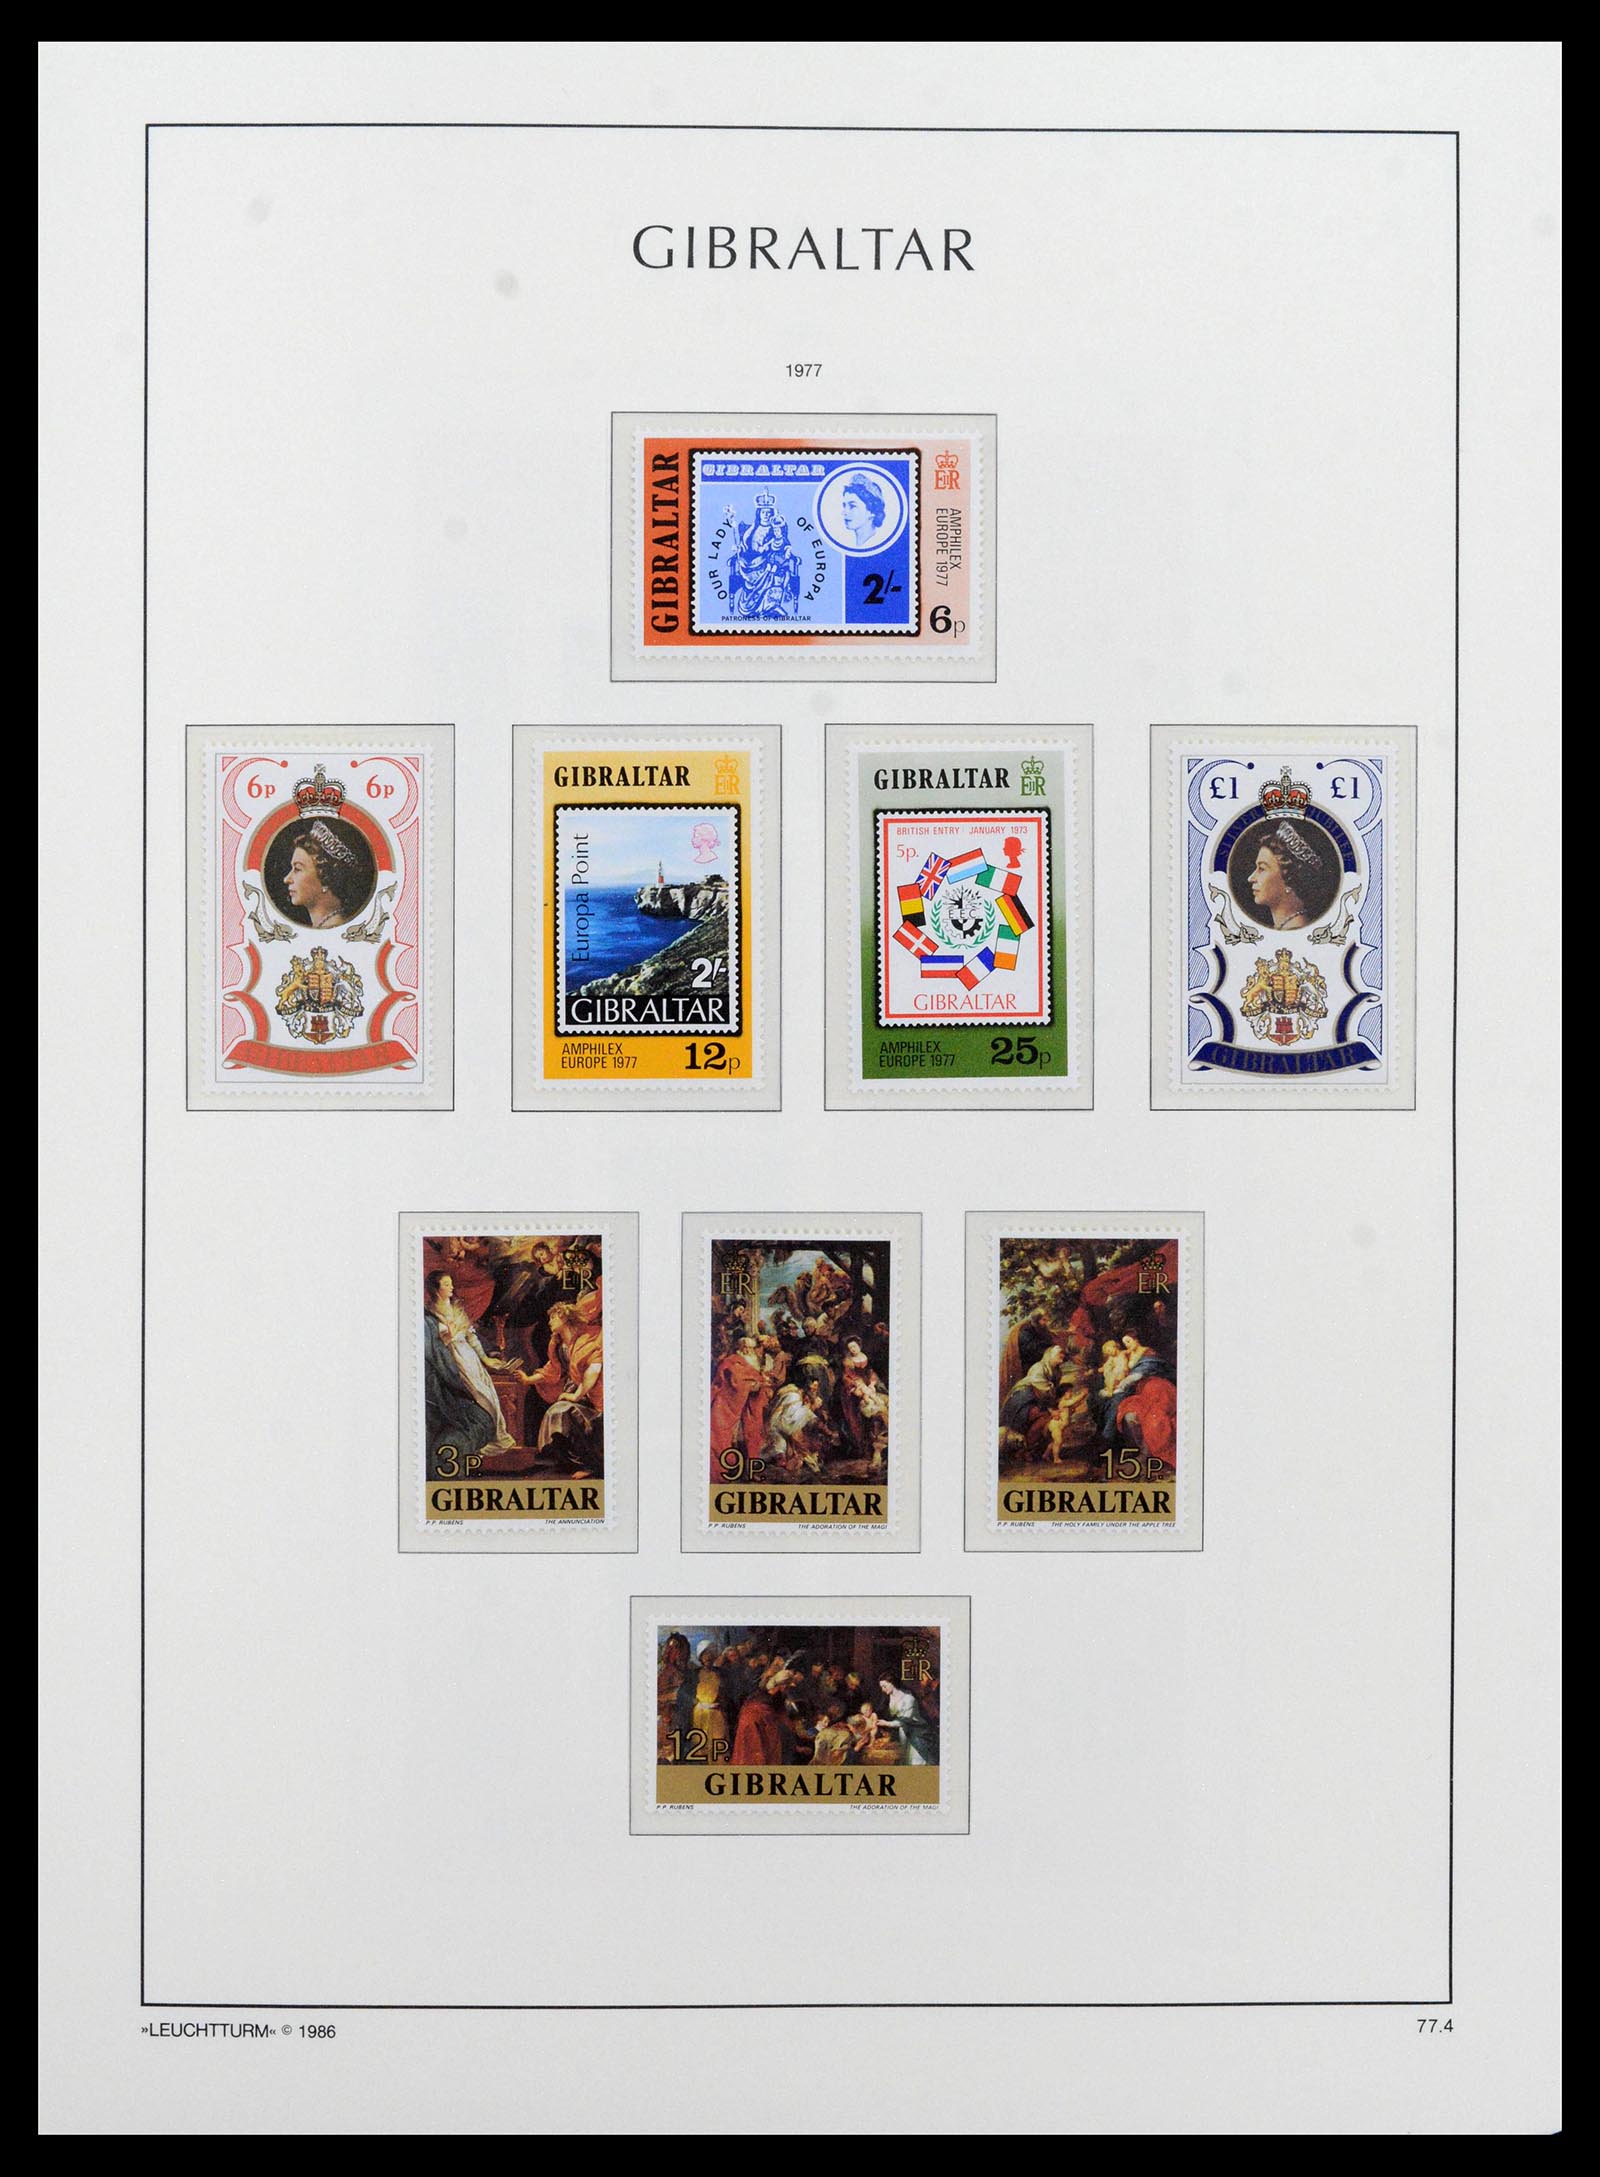 39158 0040 - Stamp collection 39158 Gibraltar 1886-2013.